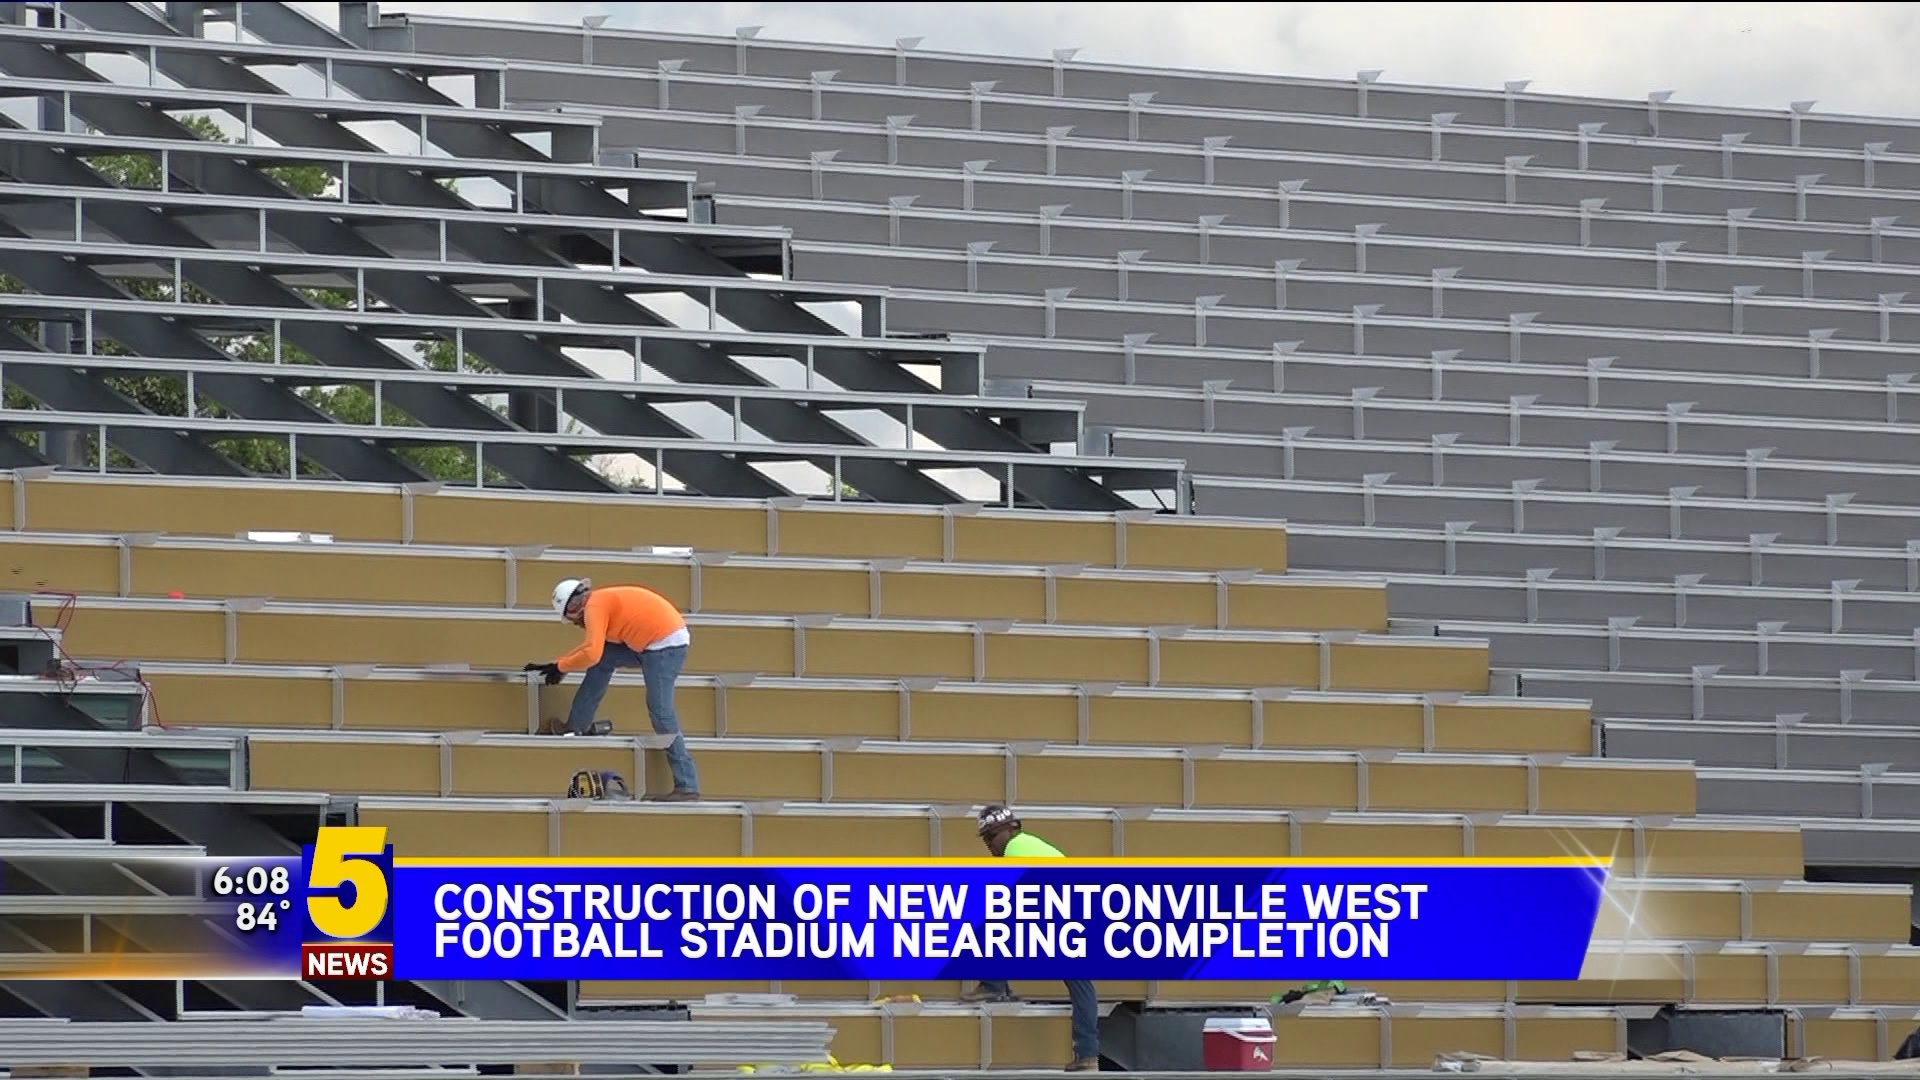 Bentonville West Football Stadium